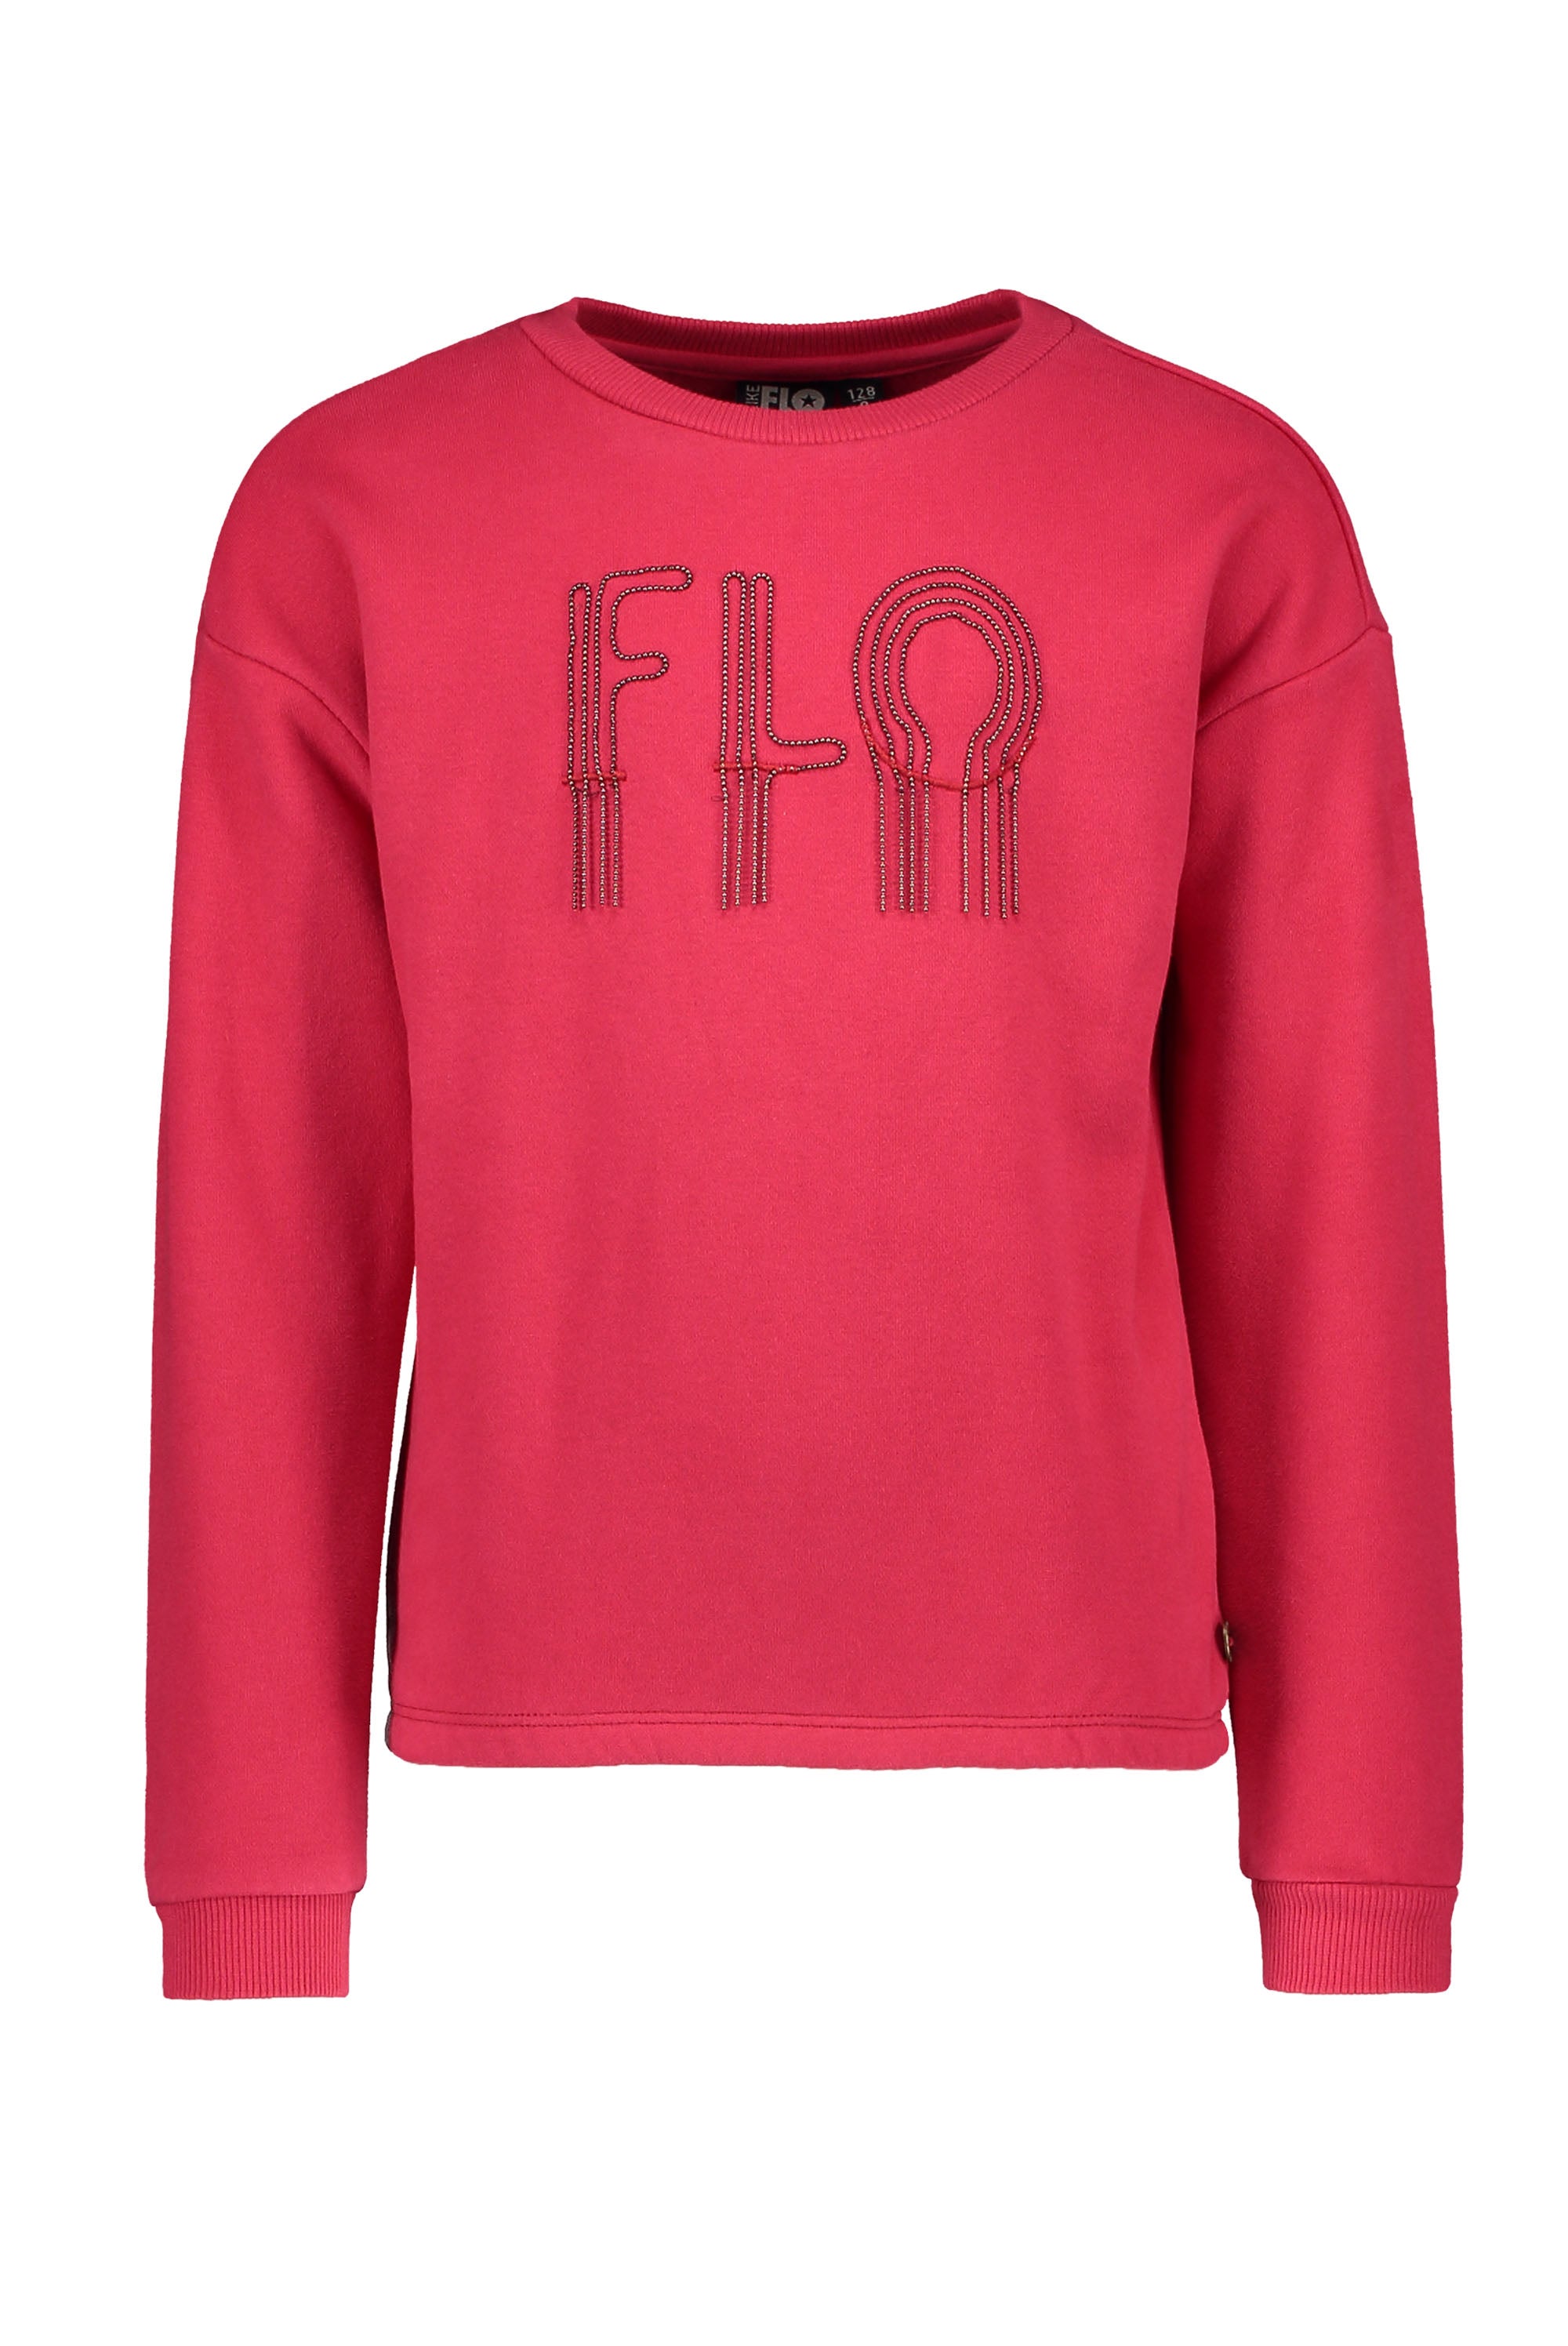 Flo Flo girls sweater divers